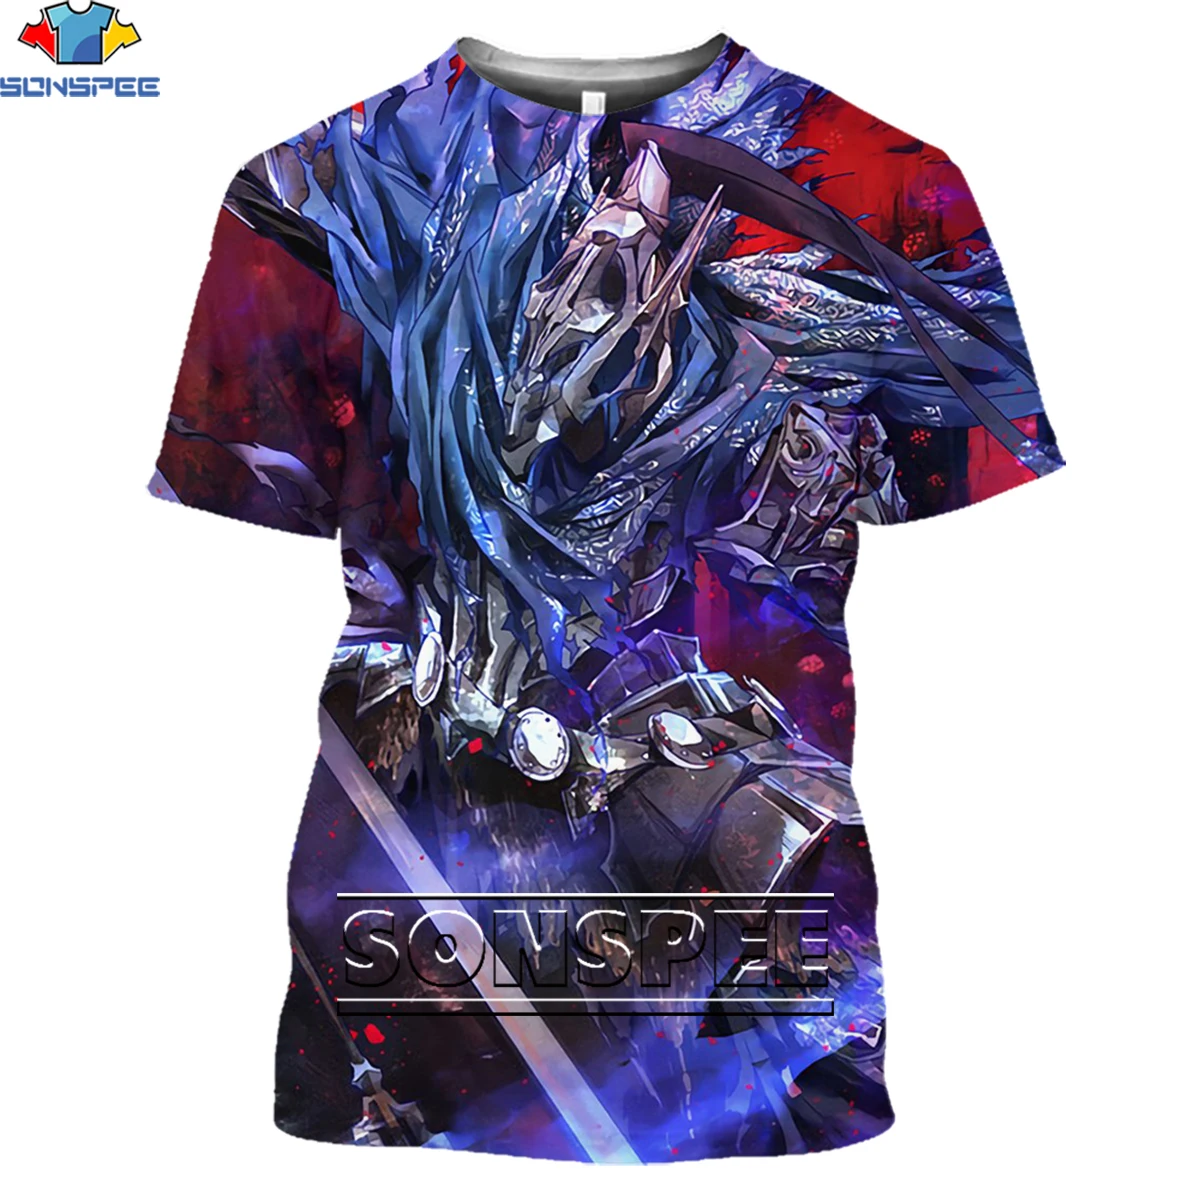 

SONSPEE 3D Print Dark Souls Game Flame Sword Armor T-shirt Summer Men's Shirt Harajuku Streetwear 2021Hot Discount Sale Clothing